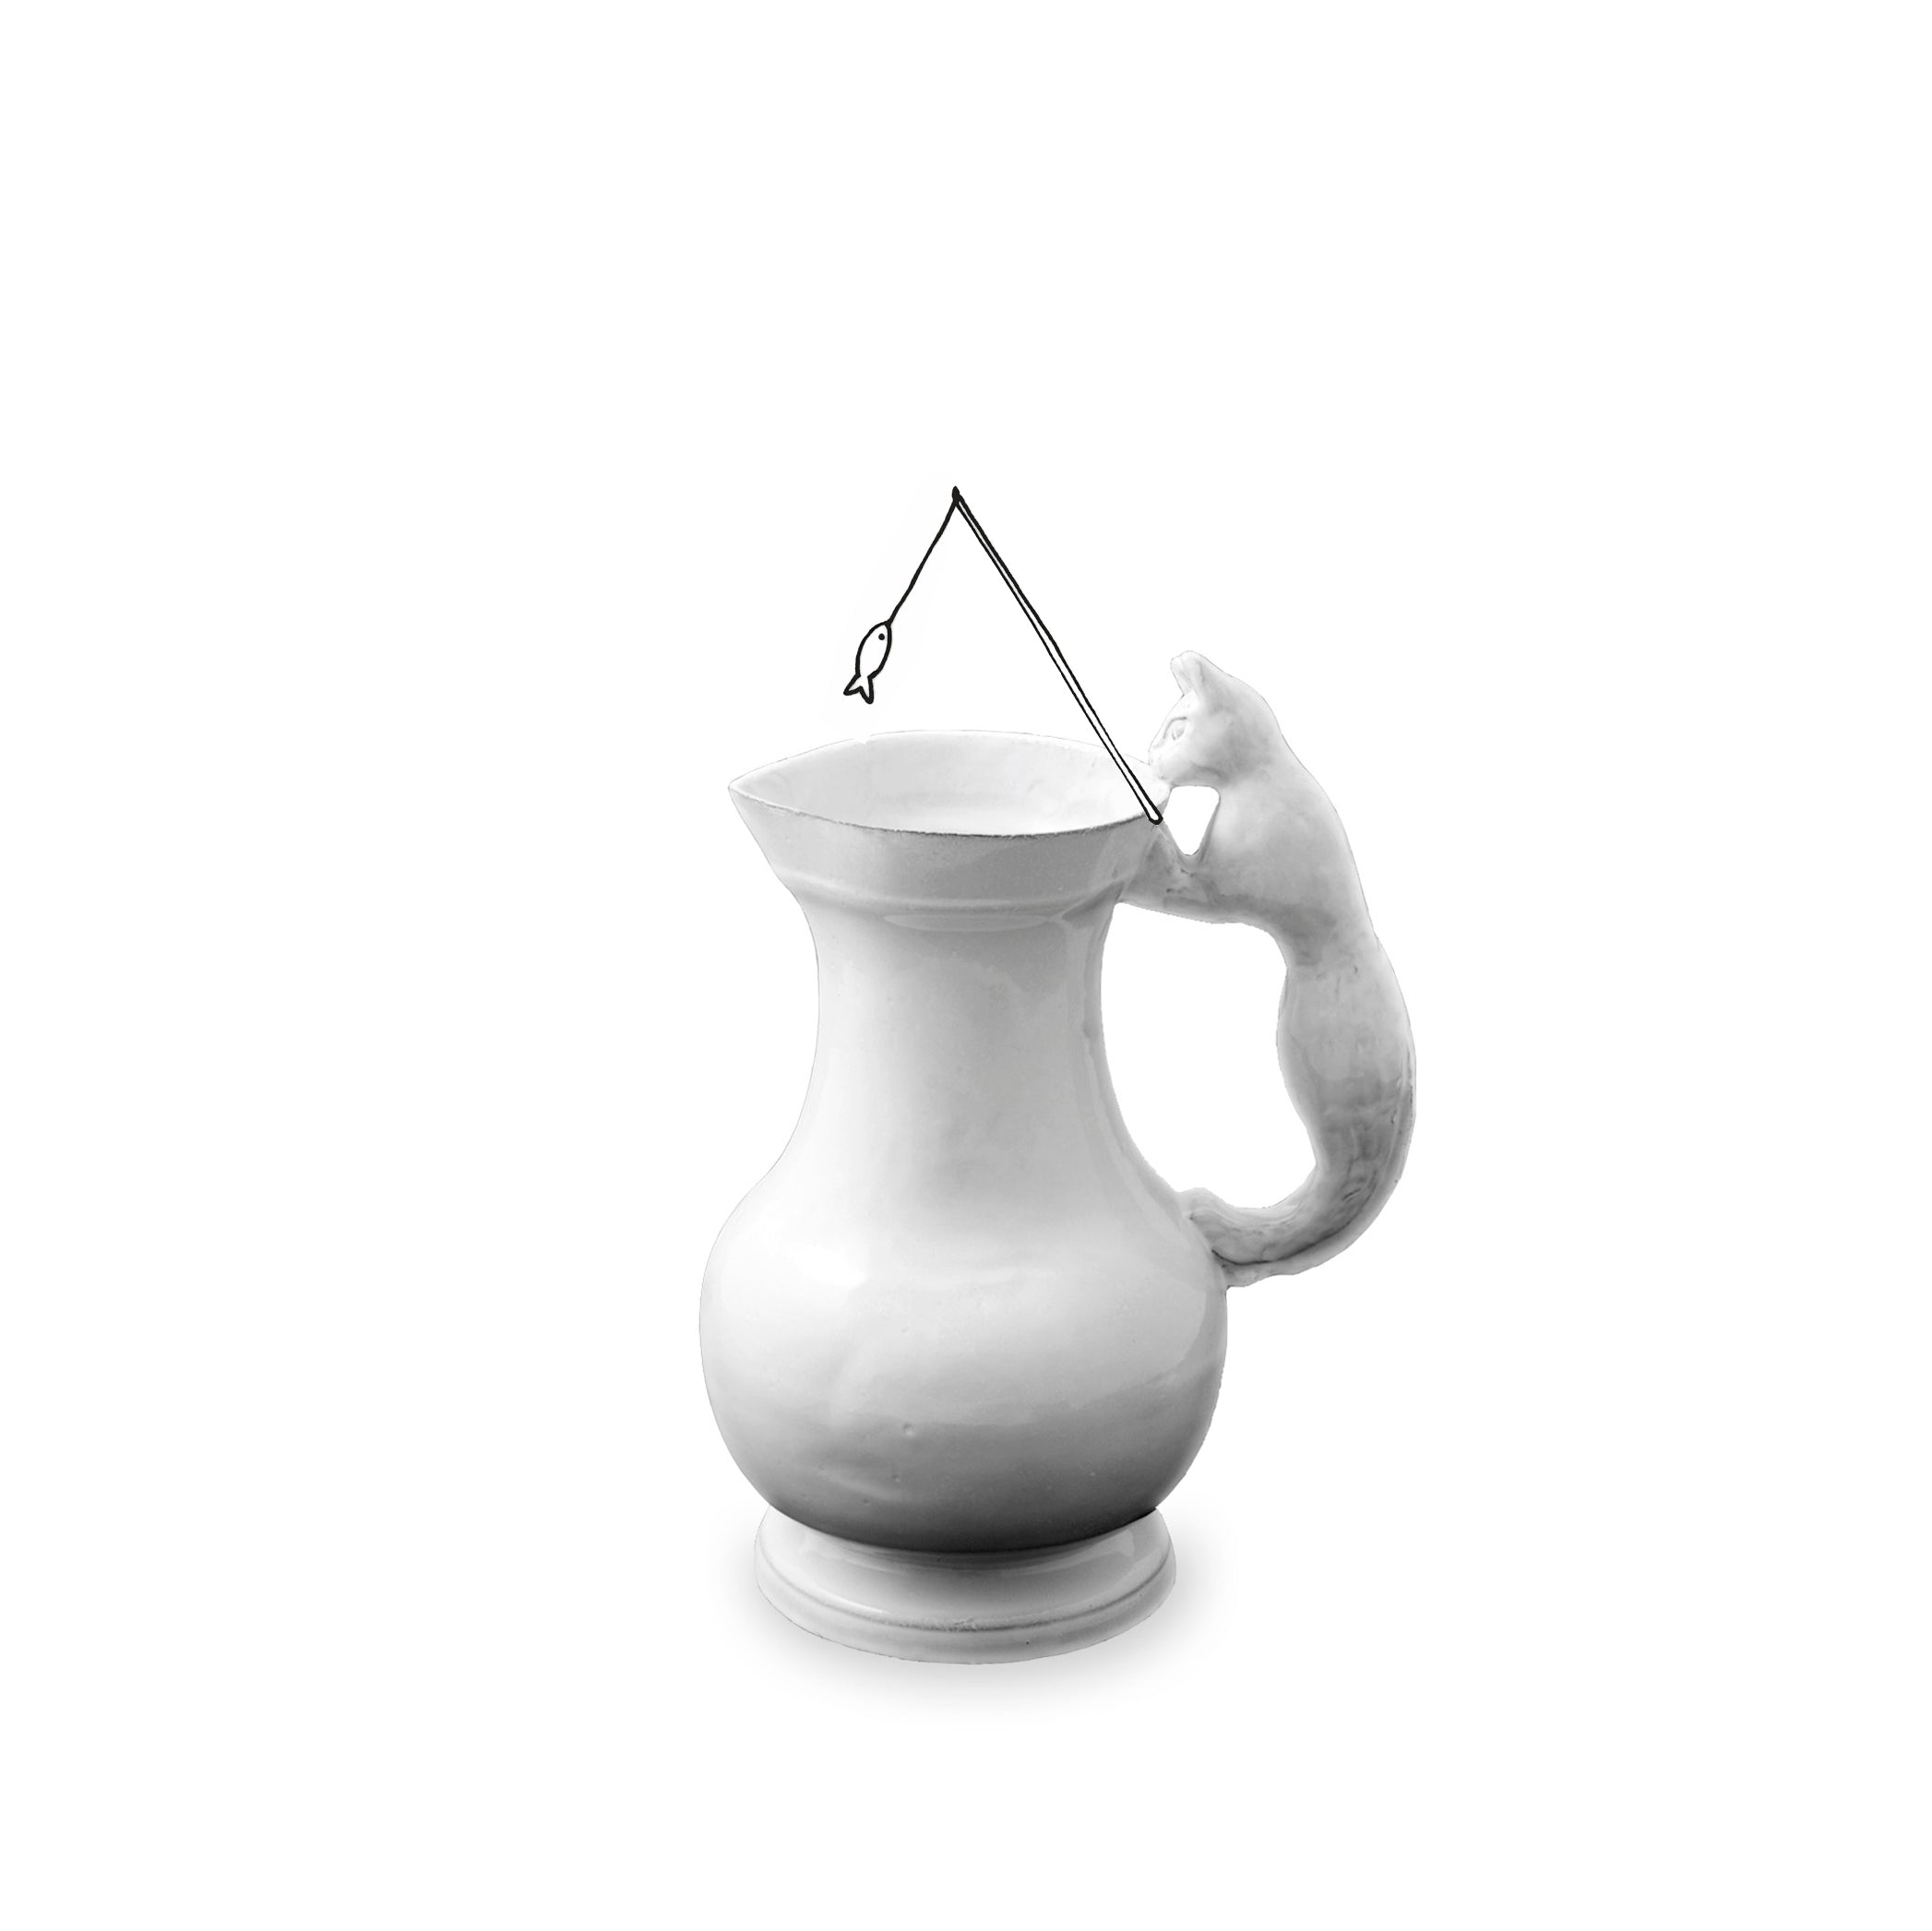 Setsuko Cat Vase by Astier de Villatte, 22.5cm